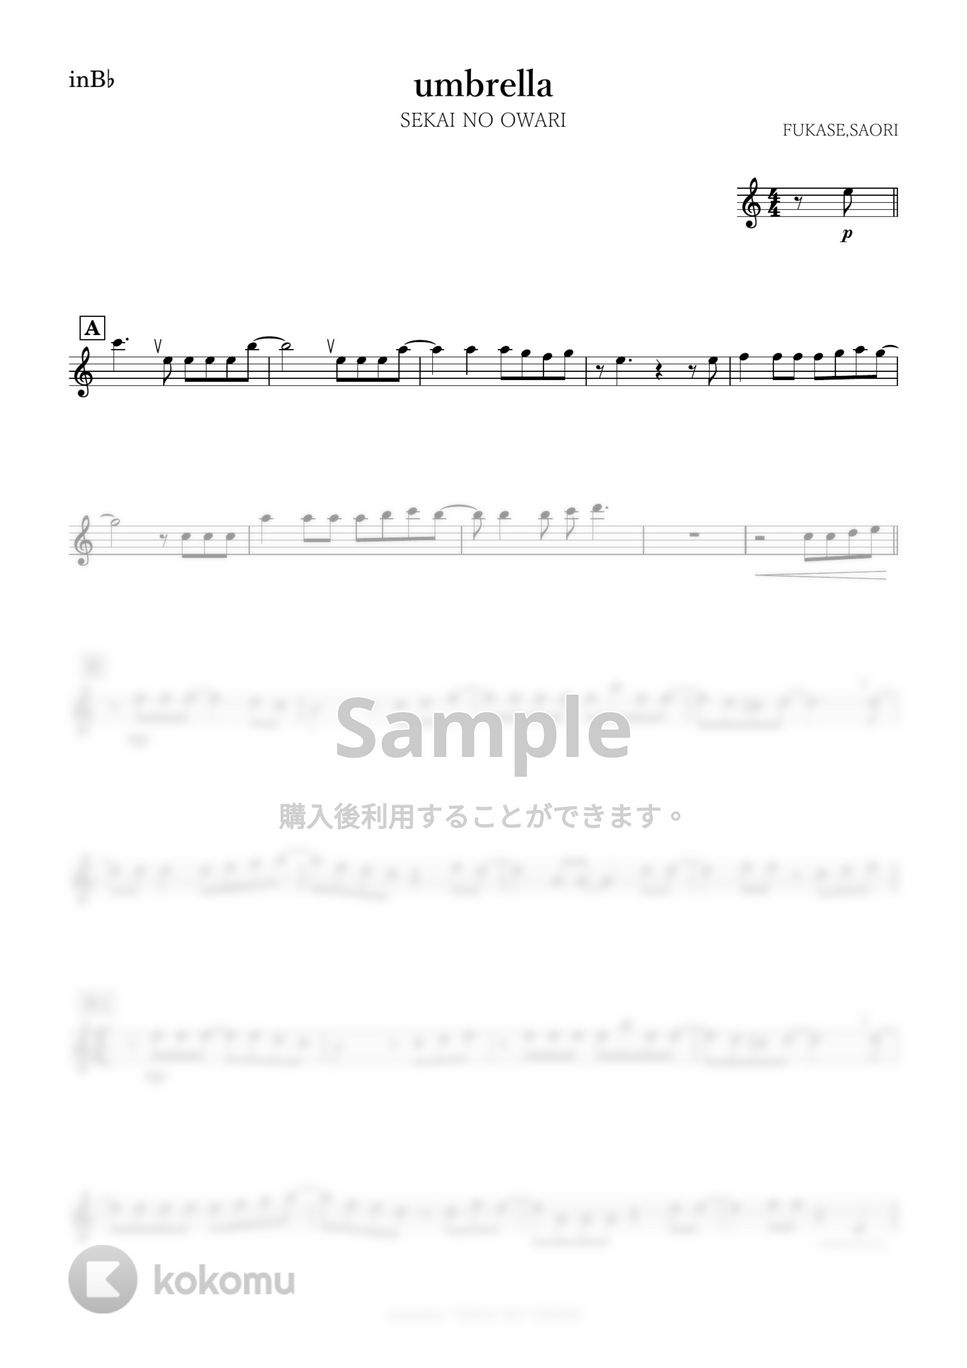 SEKAI NO OWARI - umbrella (B♭) by kanamusic